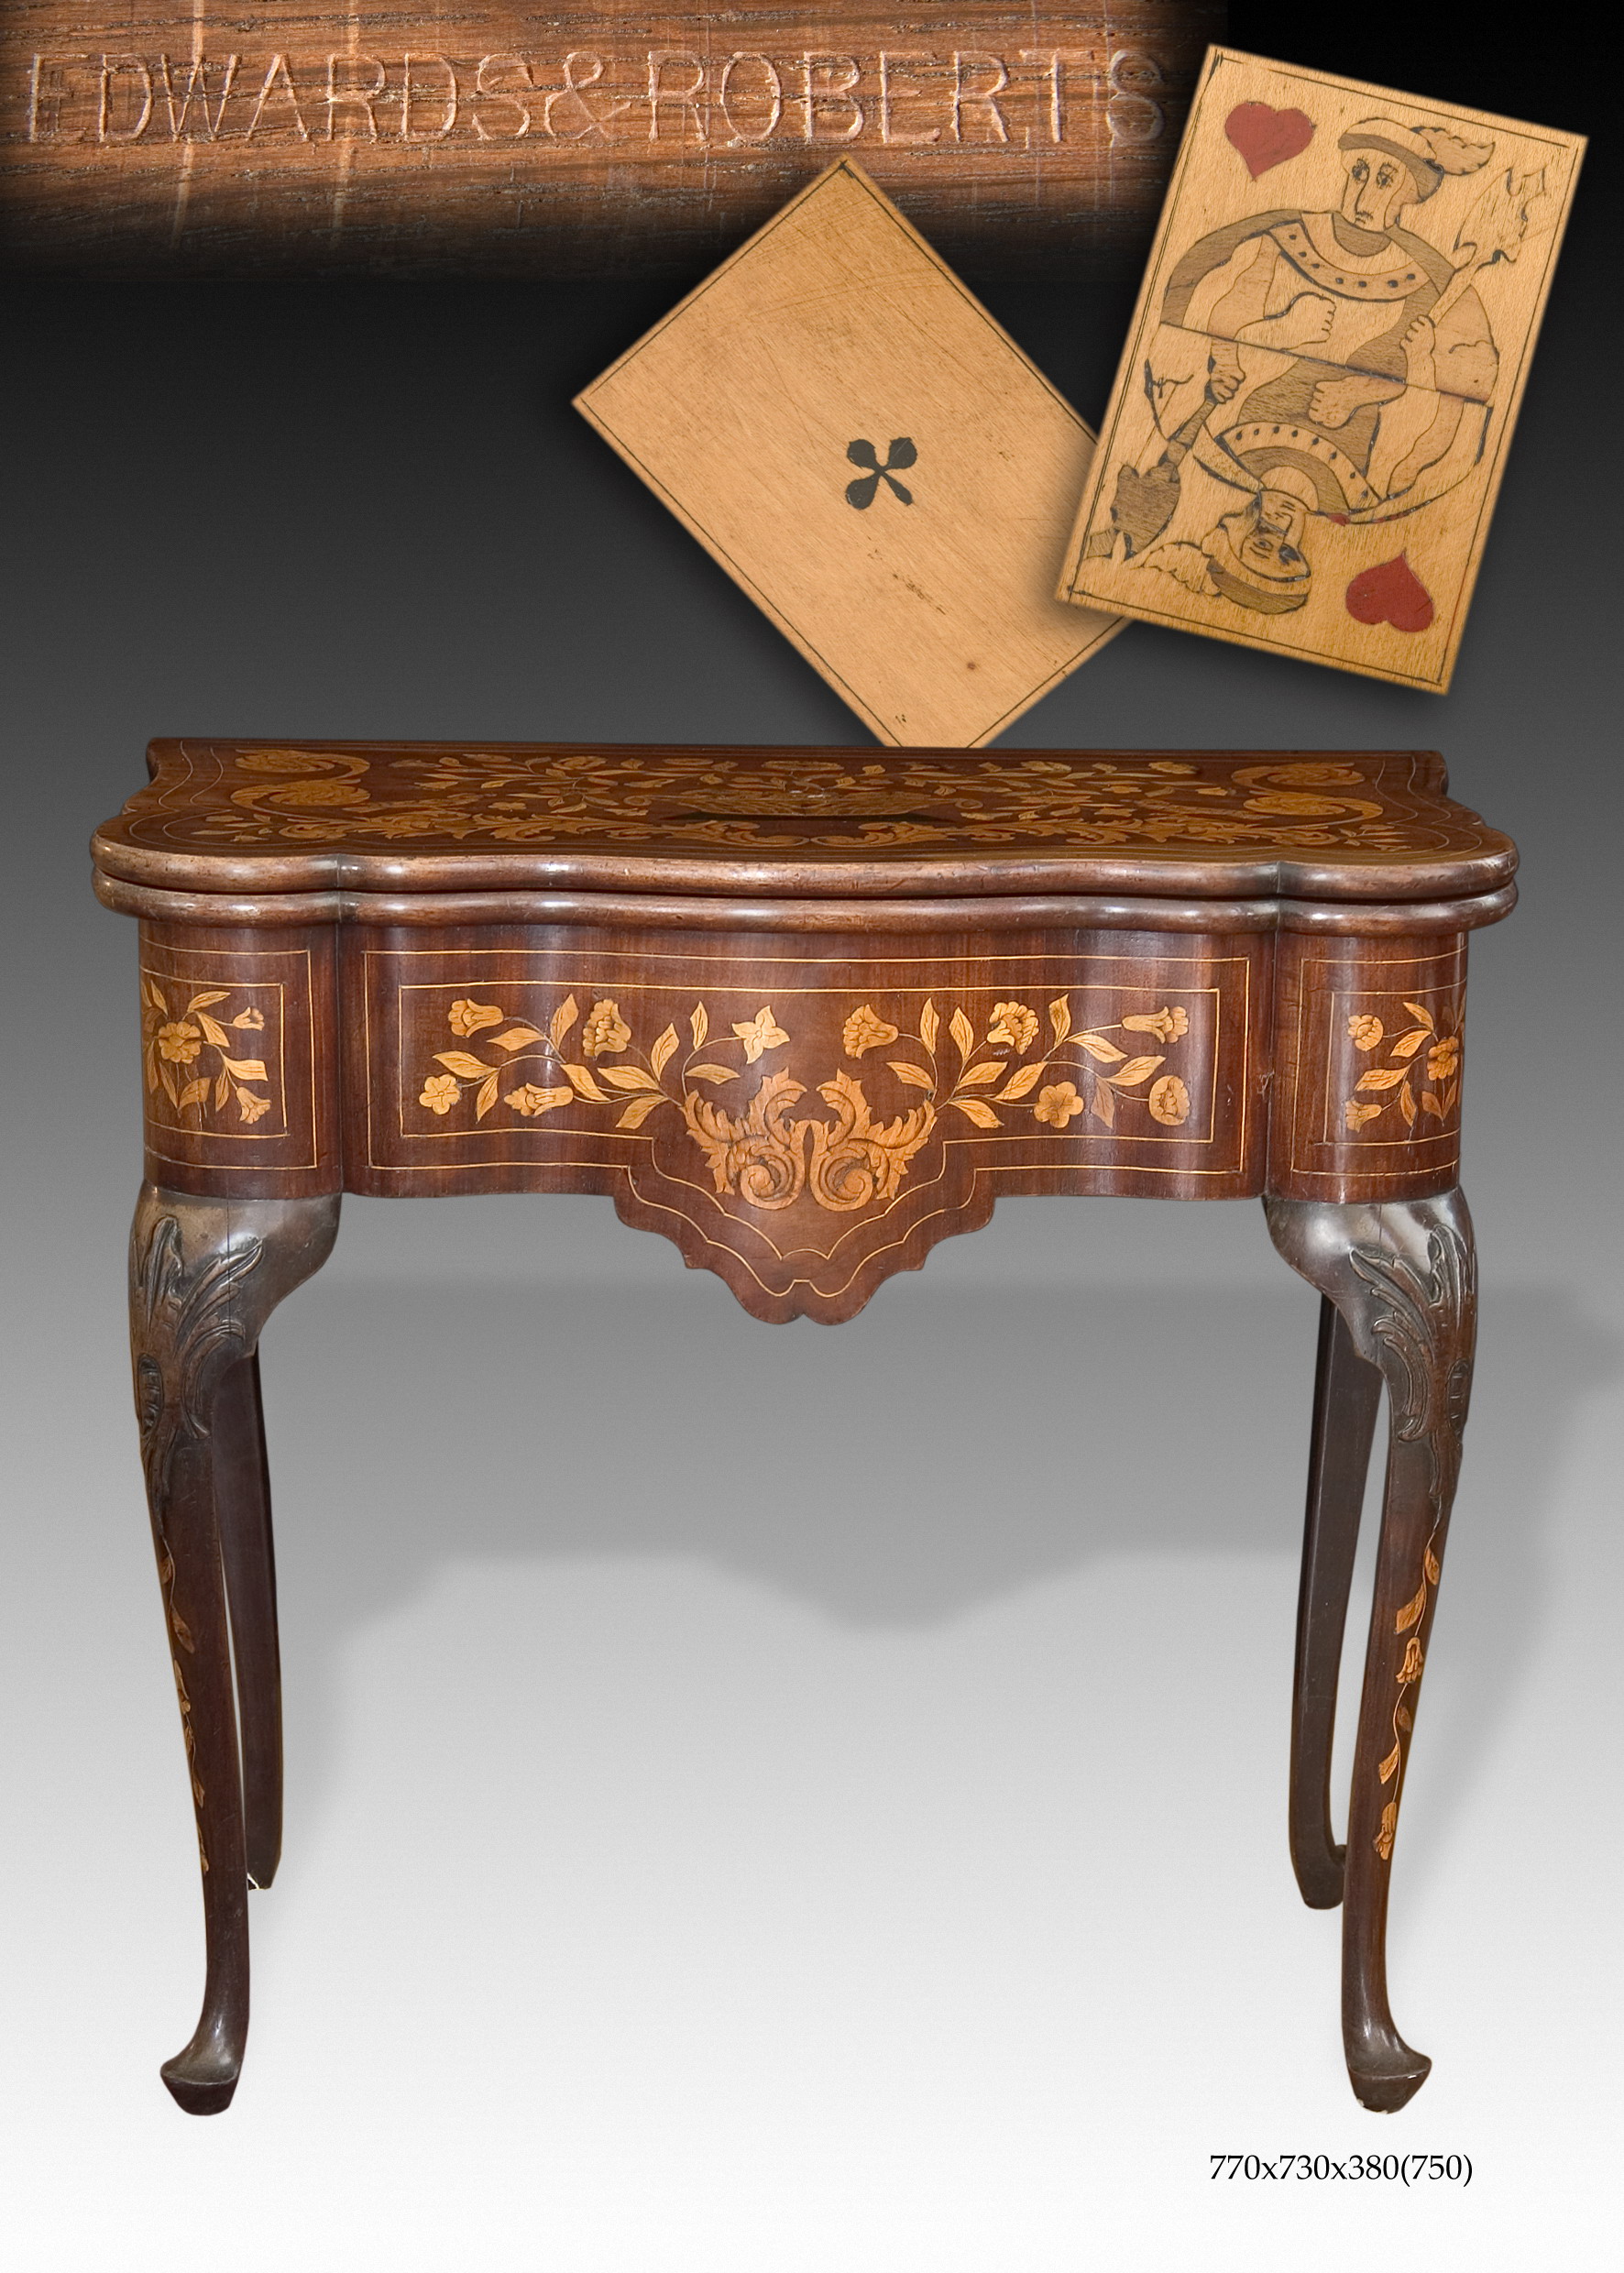 Карточный столик. Ломберный стол 19 век. Ломберный столик Тюдоров. Ломберный столик Барокко Англия. Ломберный столик 19 века.